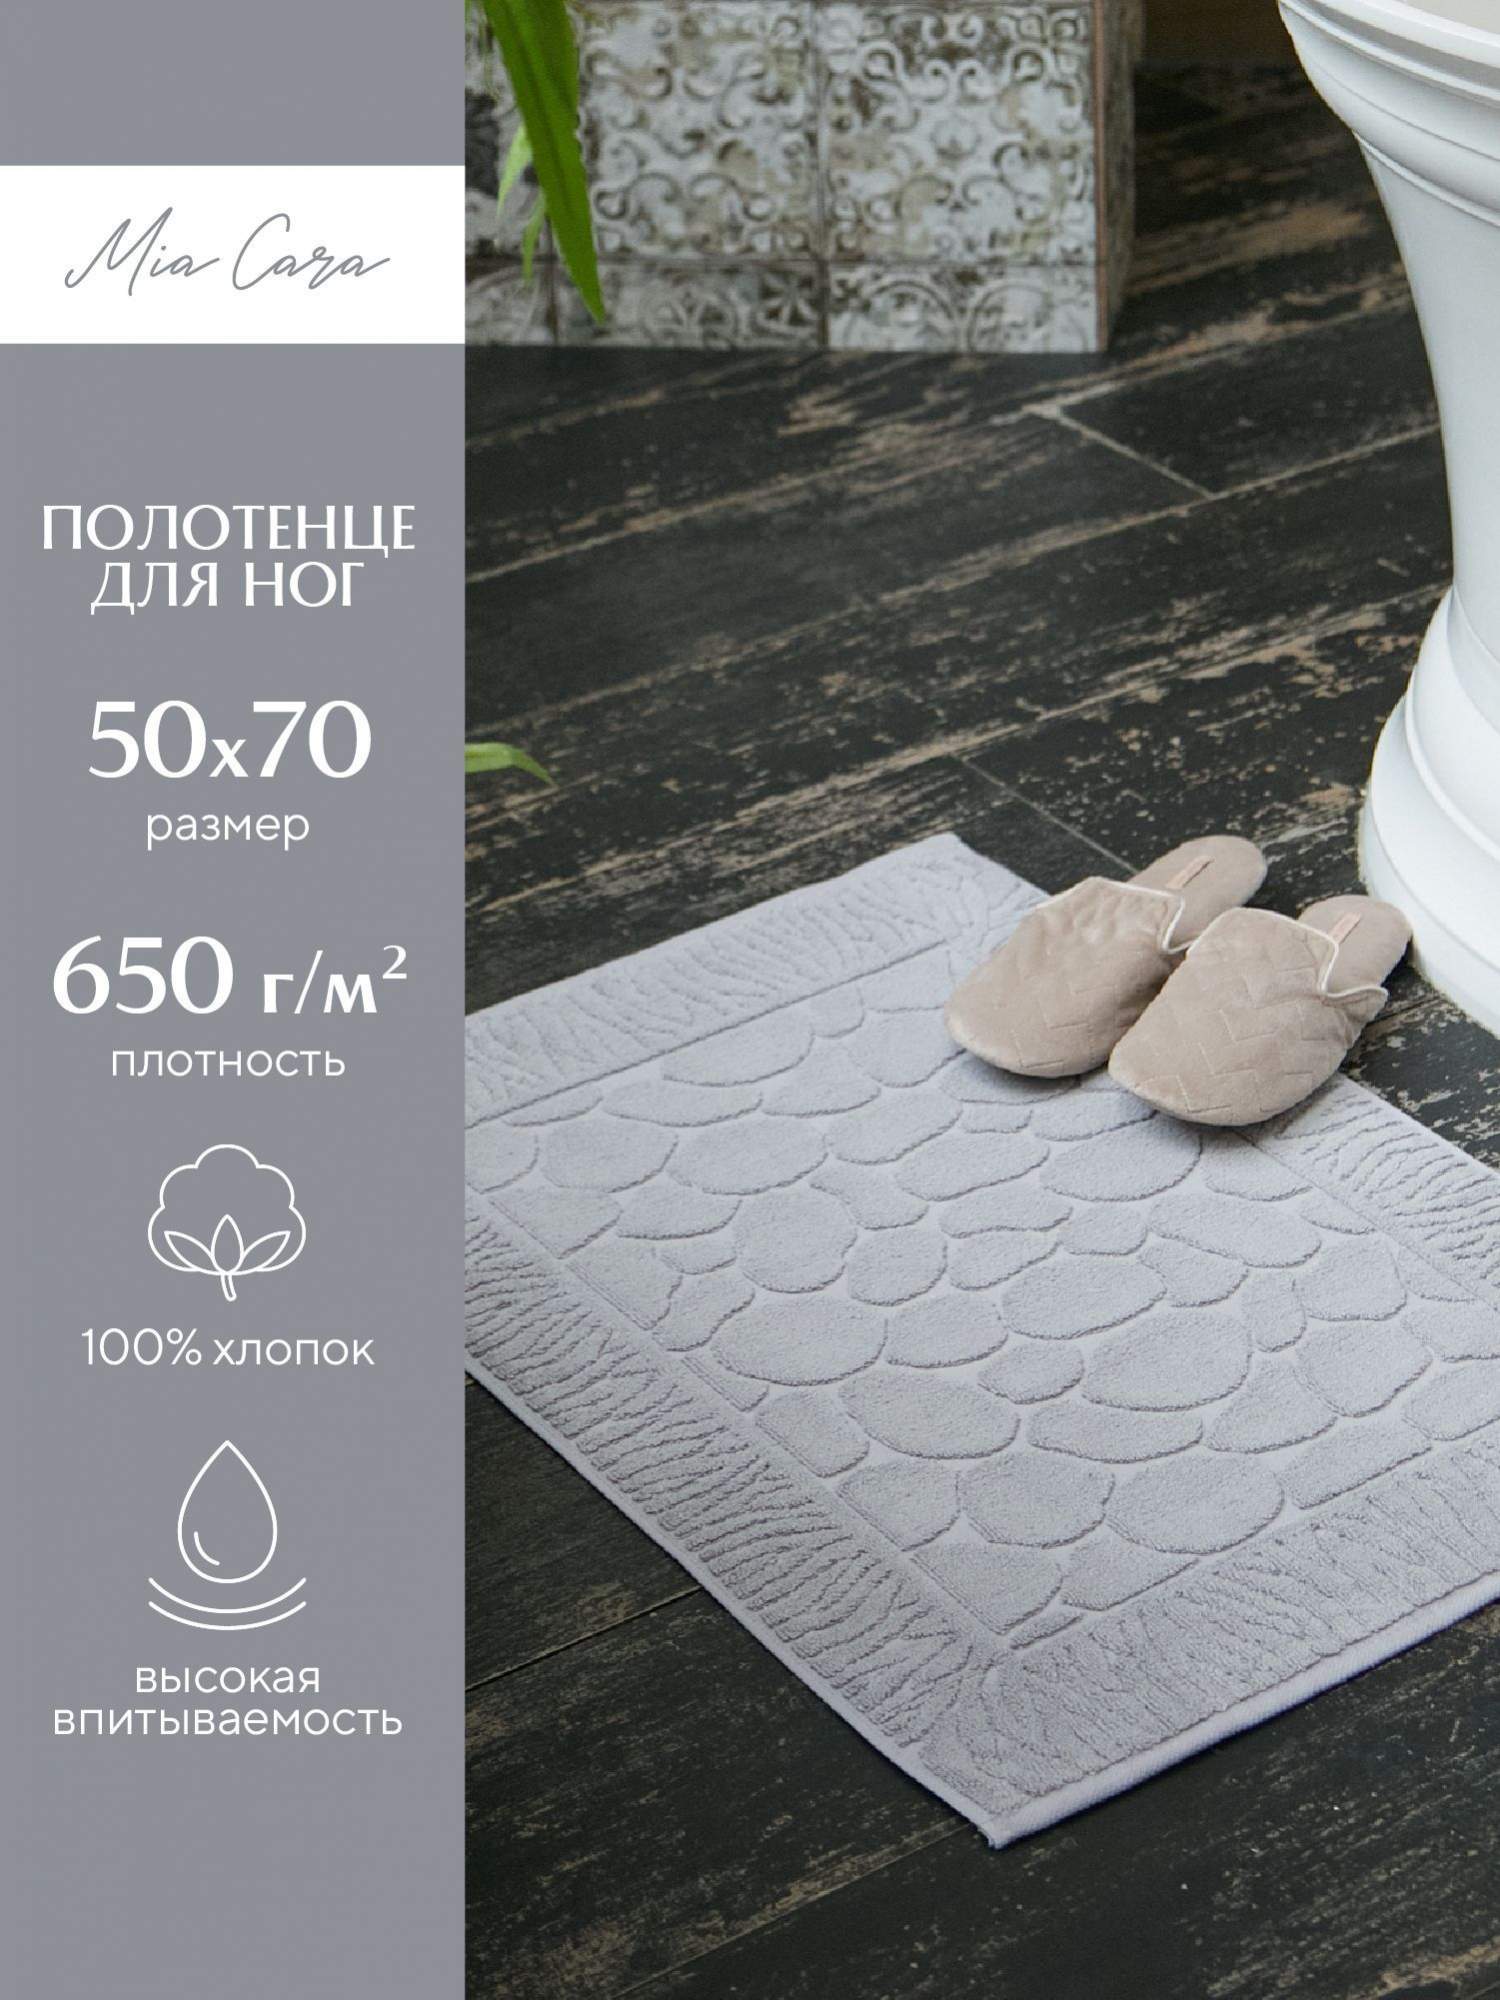 Полотенце-коврик махровое для ног 50х70 (коврик) Mia Cara светло-серый - купить в ТК Домашний текстиль склад Пушкино (со склада МегаМаркет), цена на Мегамаркет